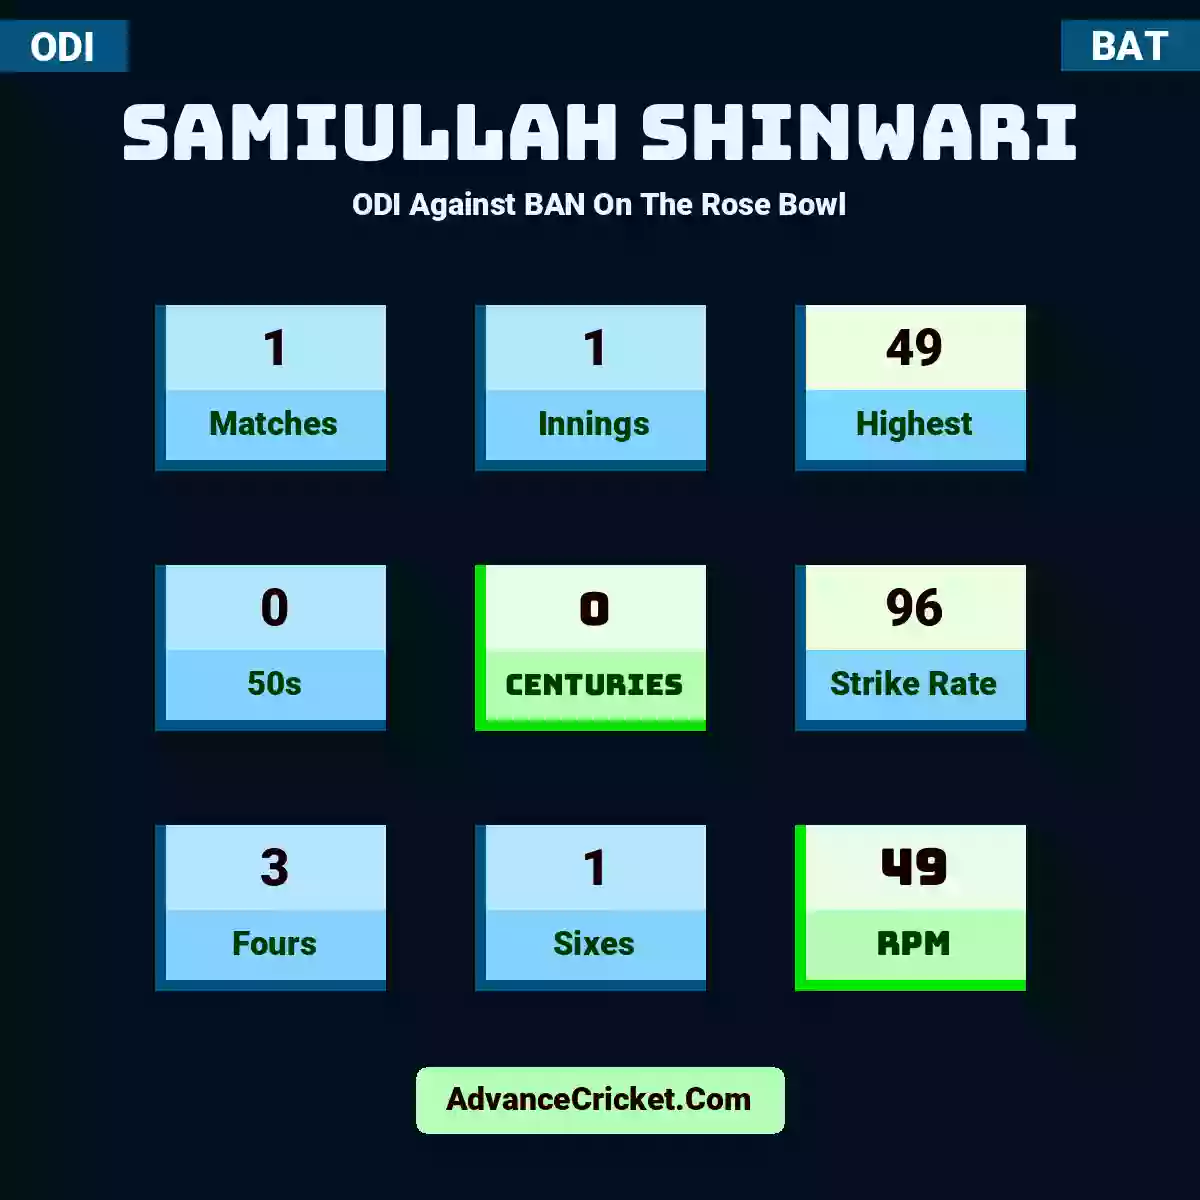 Samiullah Shinwari ODI  Against BAN On The Rose Bowl, Samiullah Shinwari played 1 matches, scored 49 runs as highest, 0 half-centuries, and 0 centuries, with a strike rate of 96. S.Shinwari hit 3 fours and 1 sixes, with an RPM of 49.